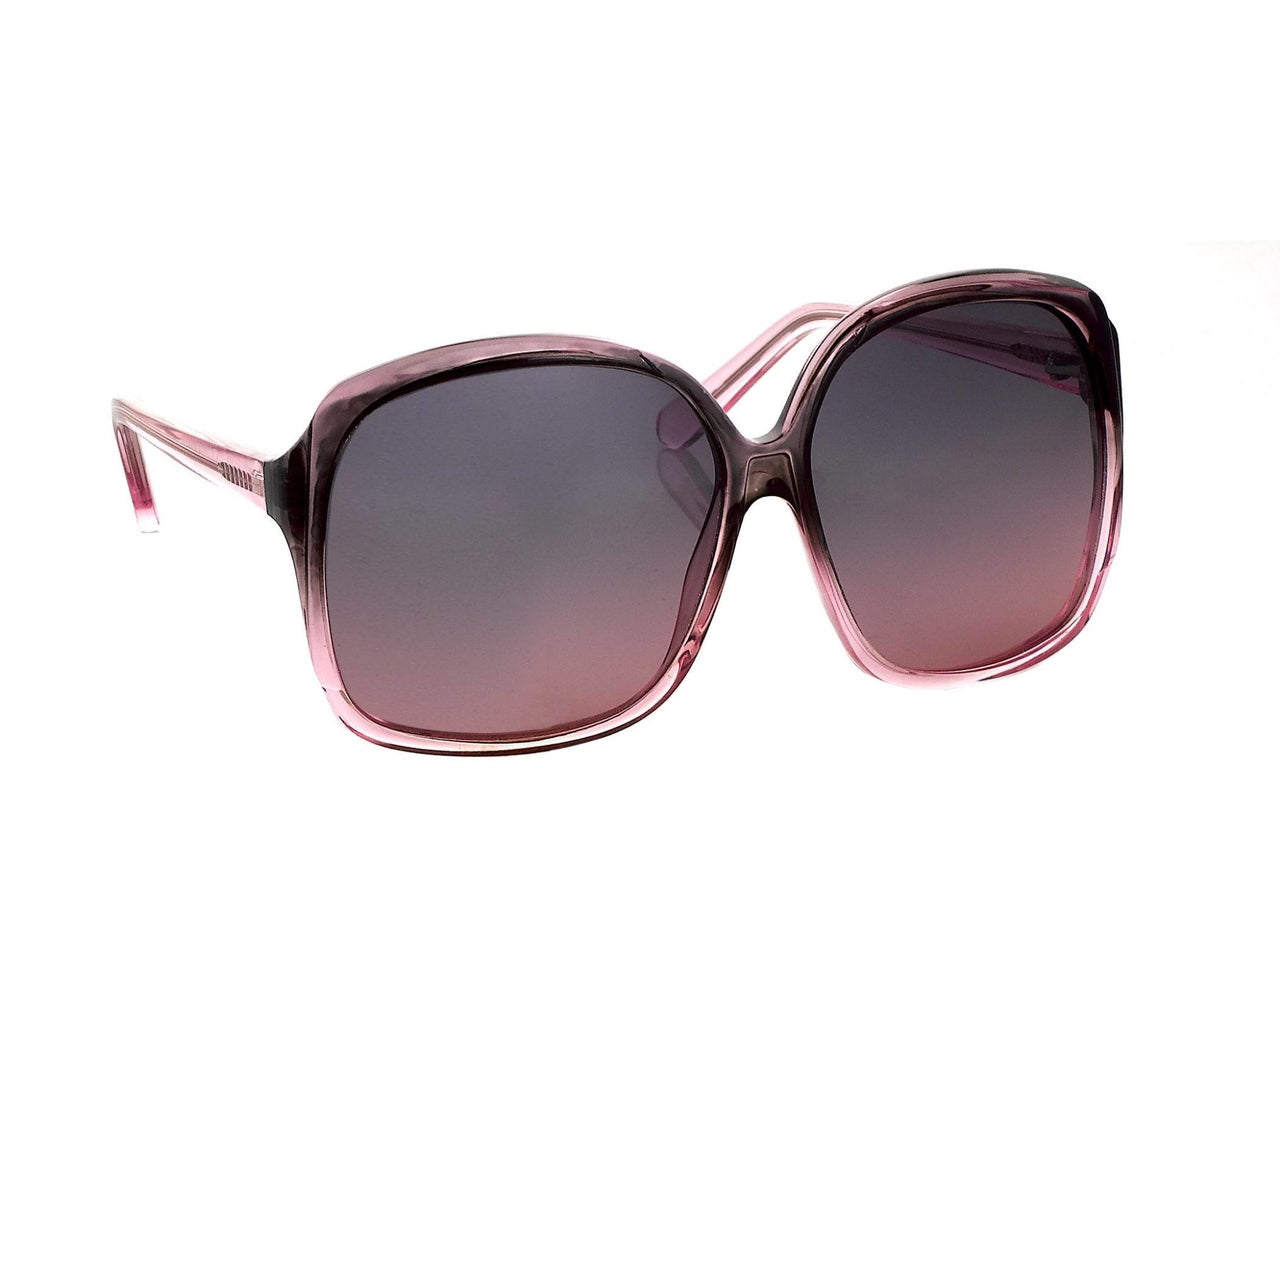 Antonio Berardi Women Sunglasses Oversized Frame Grey/Pink and Grey Graduated Lenses - 9AB2C2PINK - Watches & Crystals